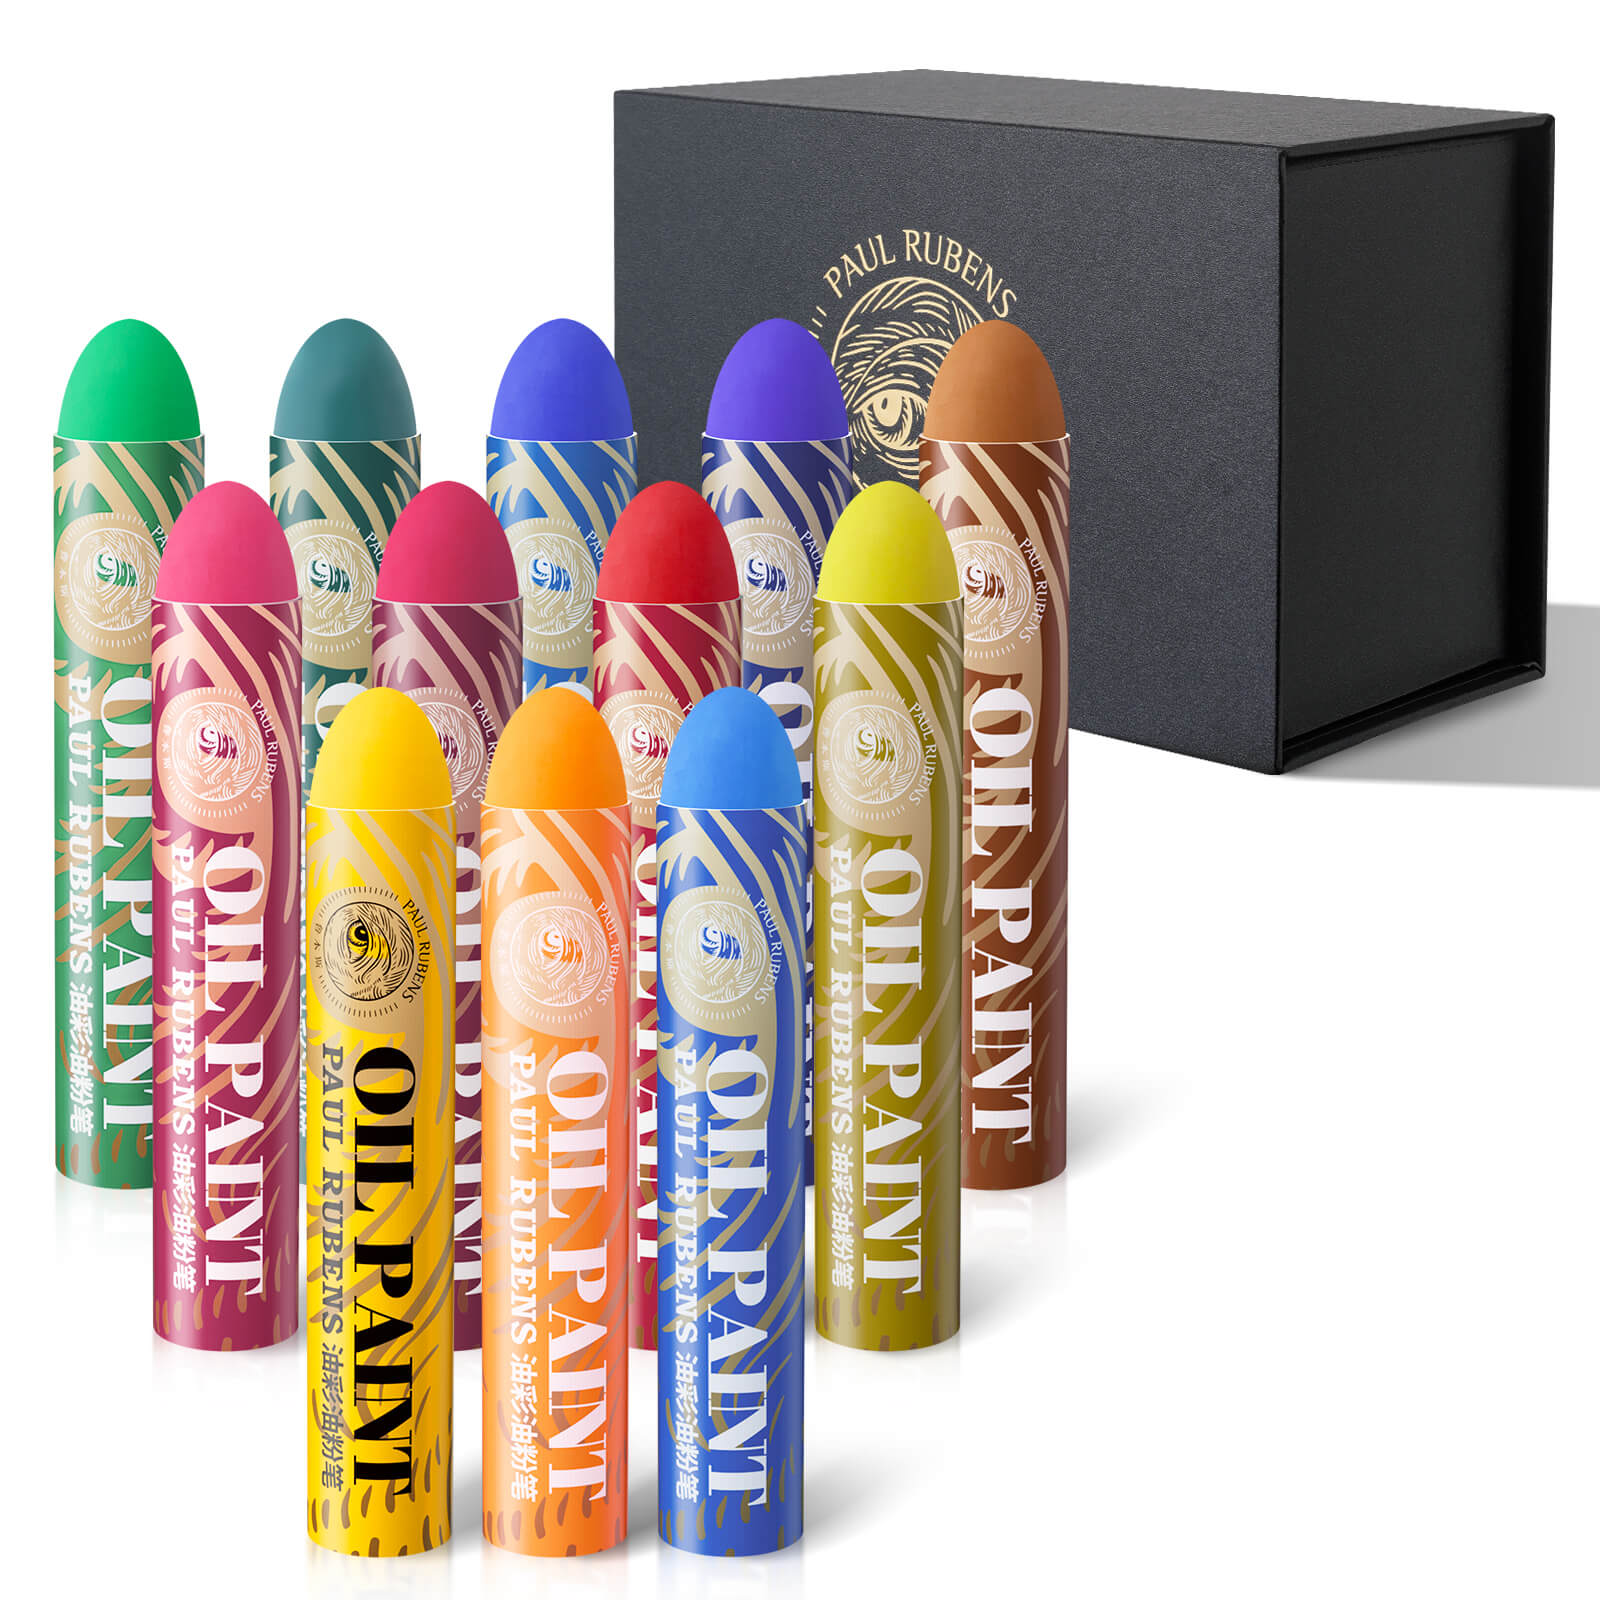 Paul Rubens HAIYA Oil Pastels, 12 Vibrant Colors Extra Large Oil Pastels